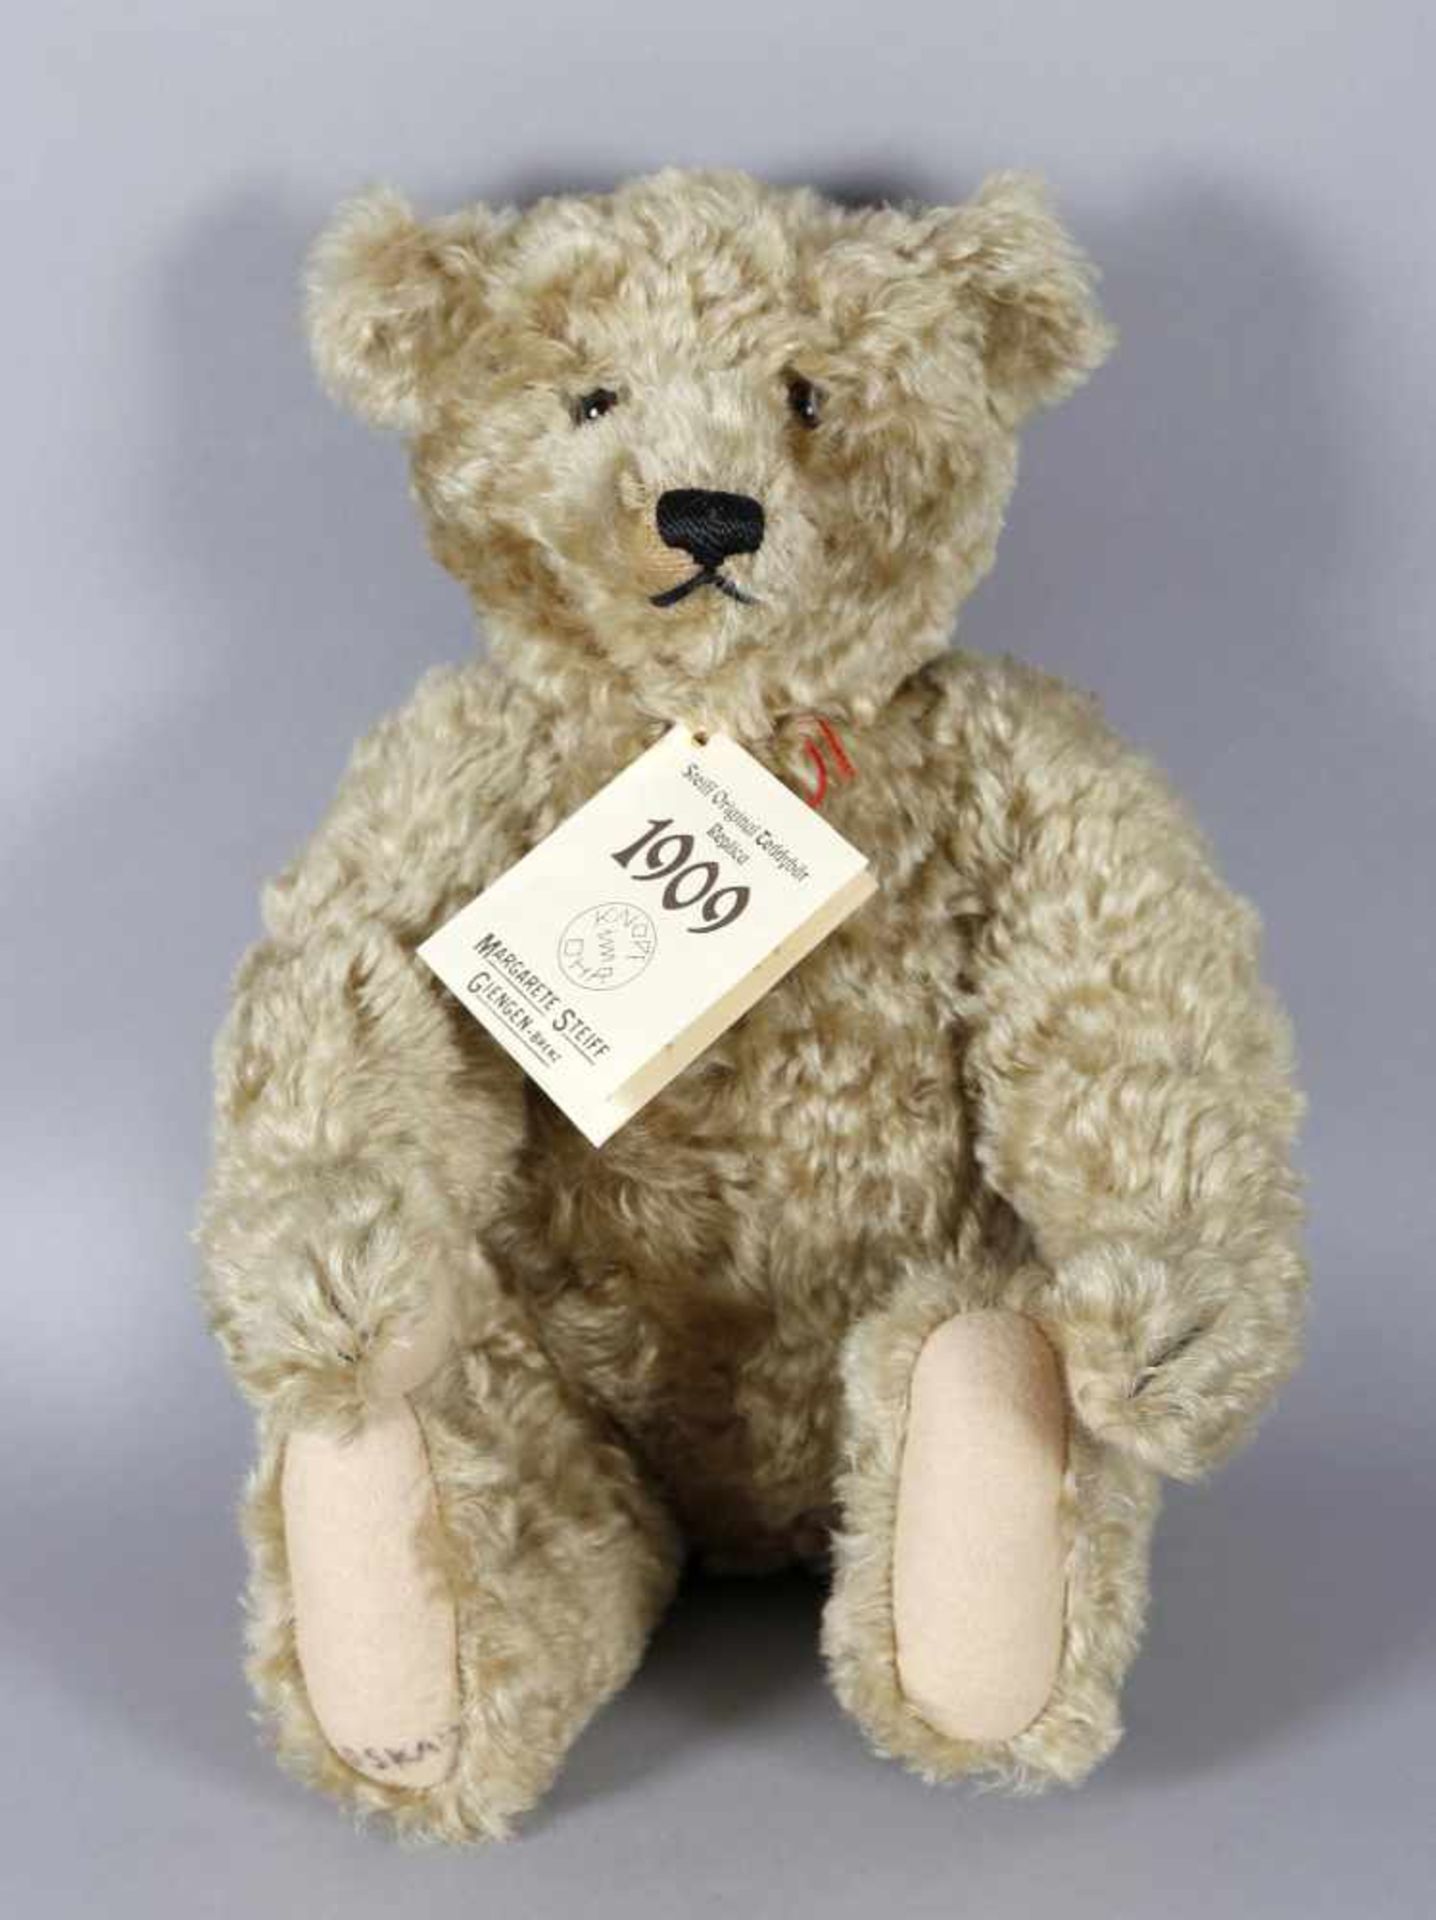 Teddybär, wohl Steiff Original Teddybär Replica 1909grünlich-blond, mit Stimmdose, Loch im Ohr